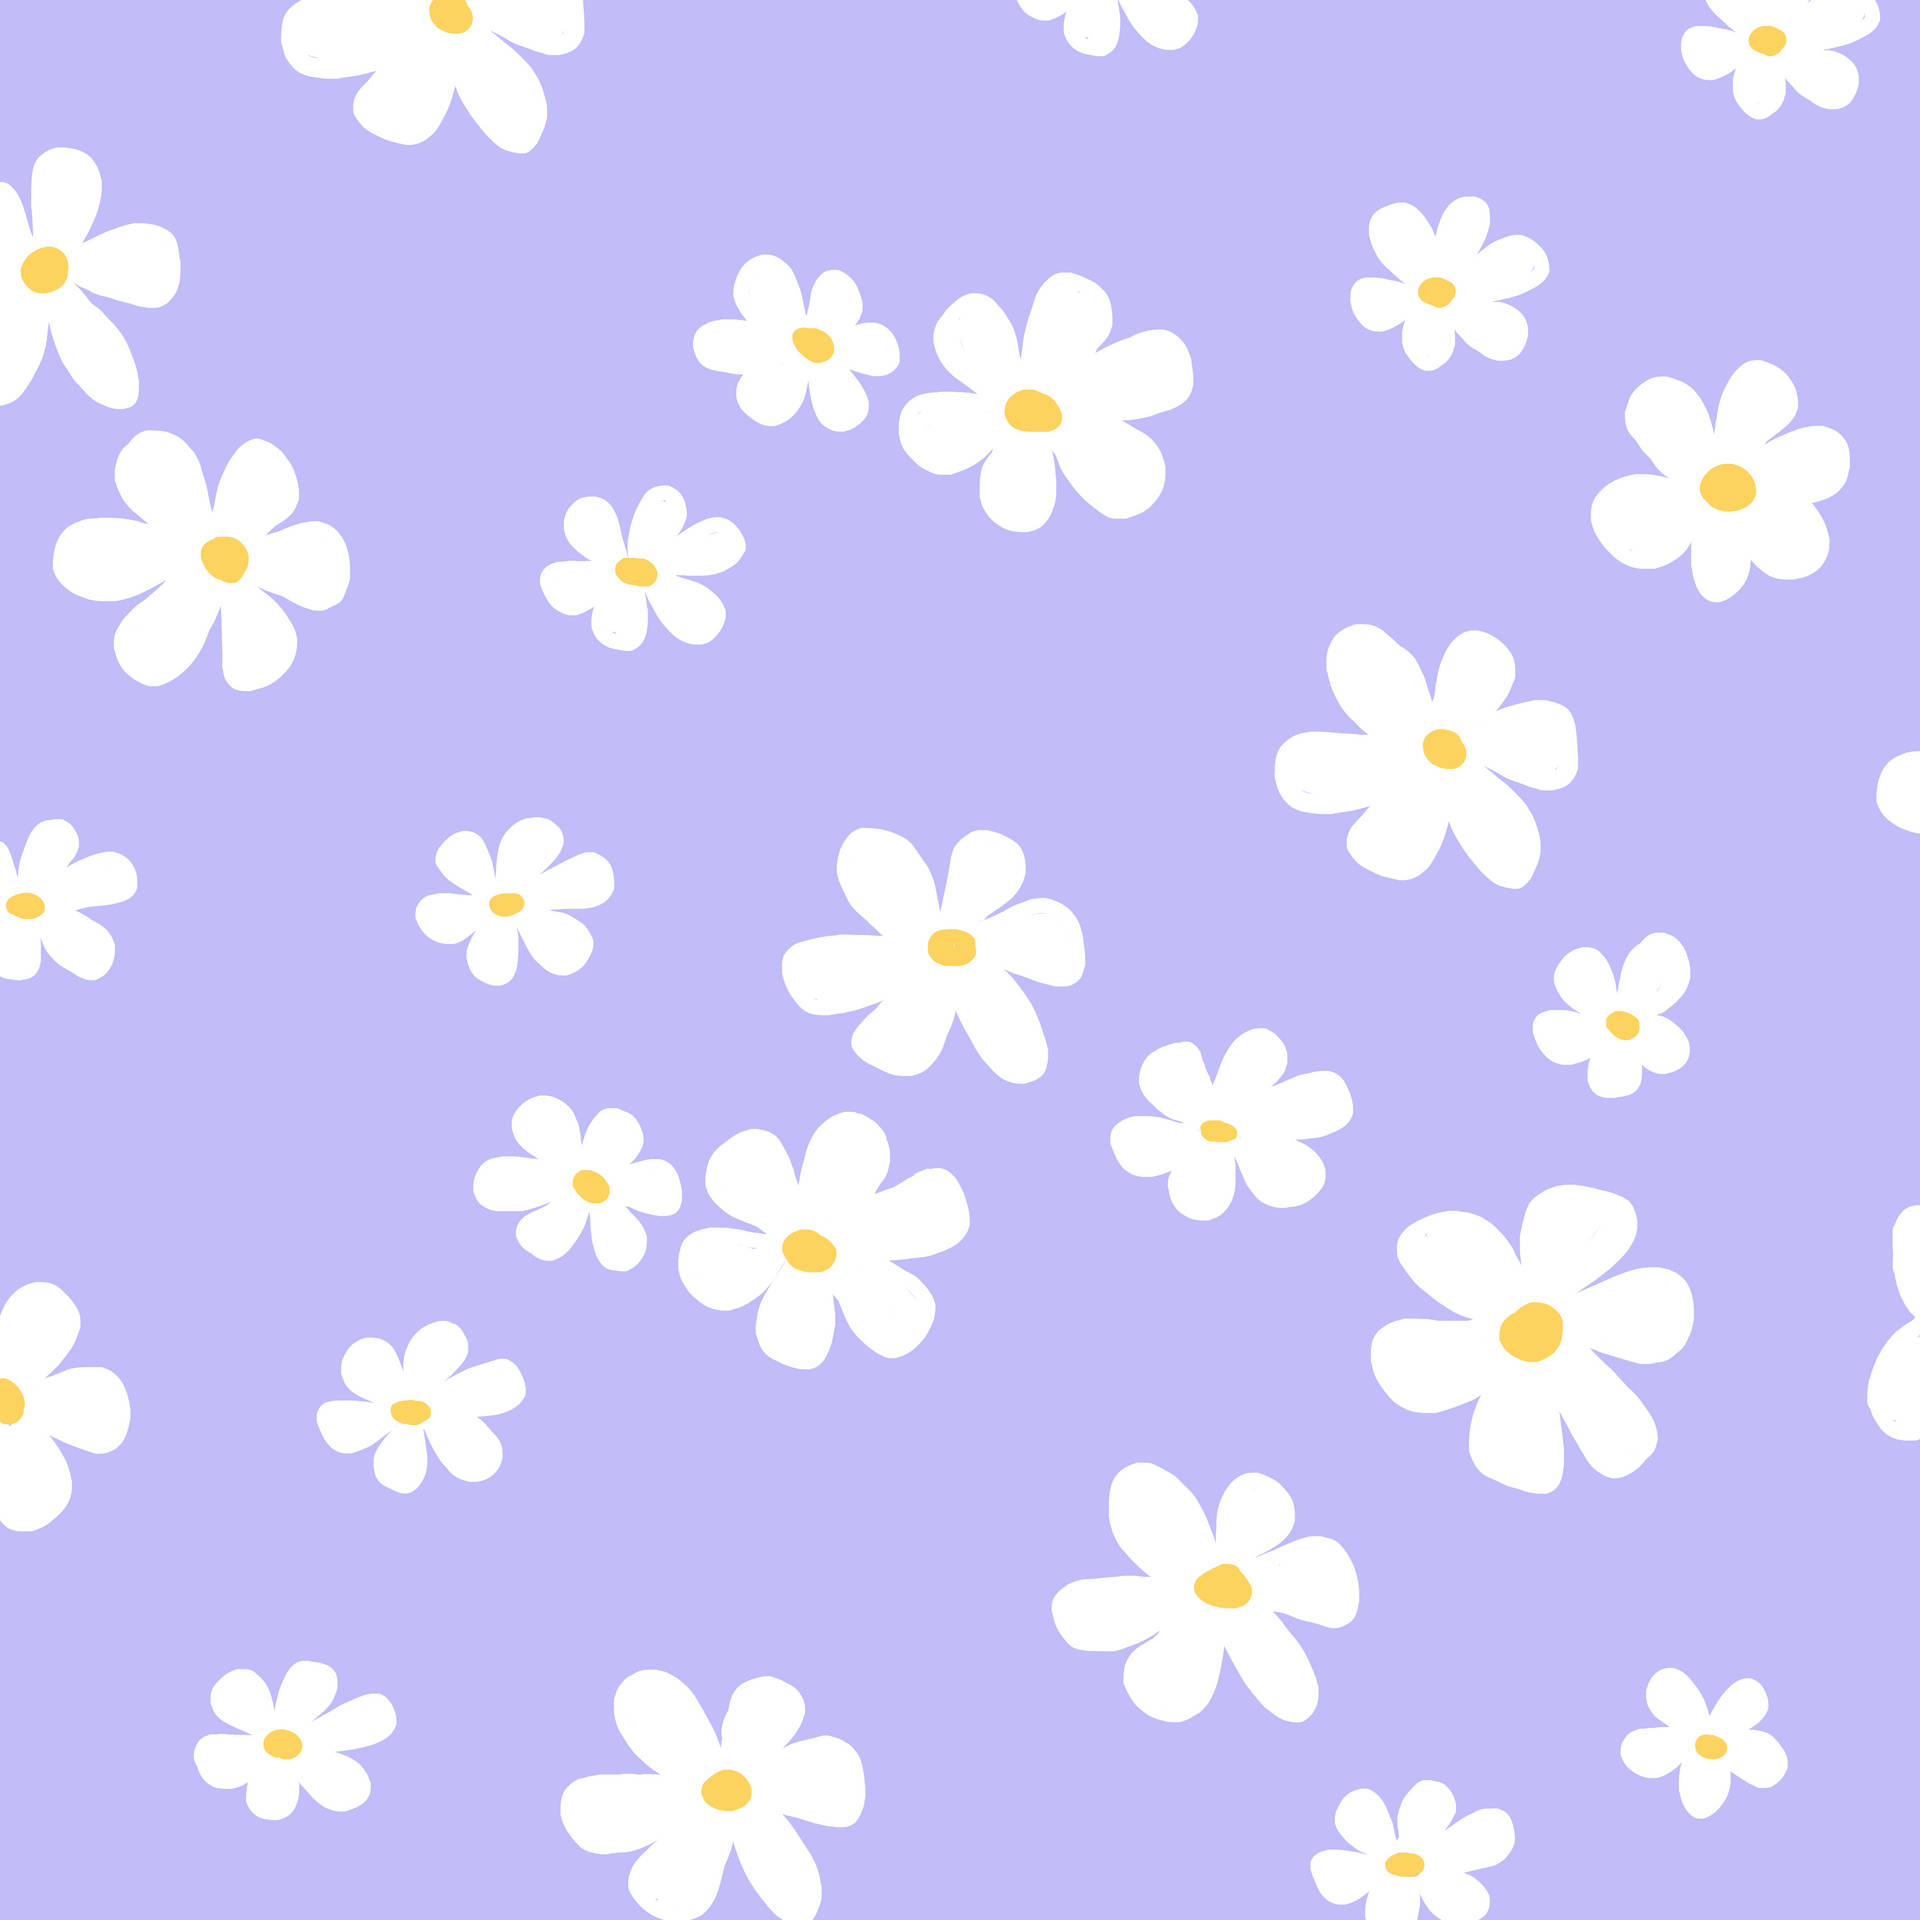 Download Image Aesthetic Purple Flower in a Garden Wallpaper ...